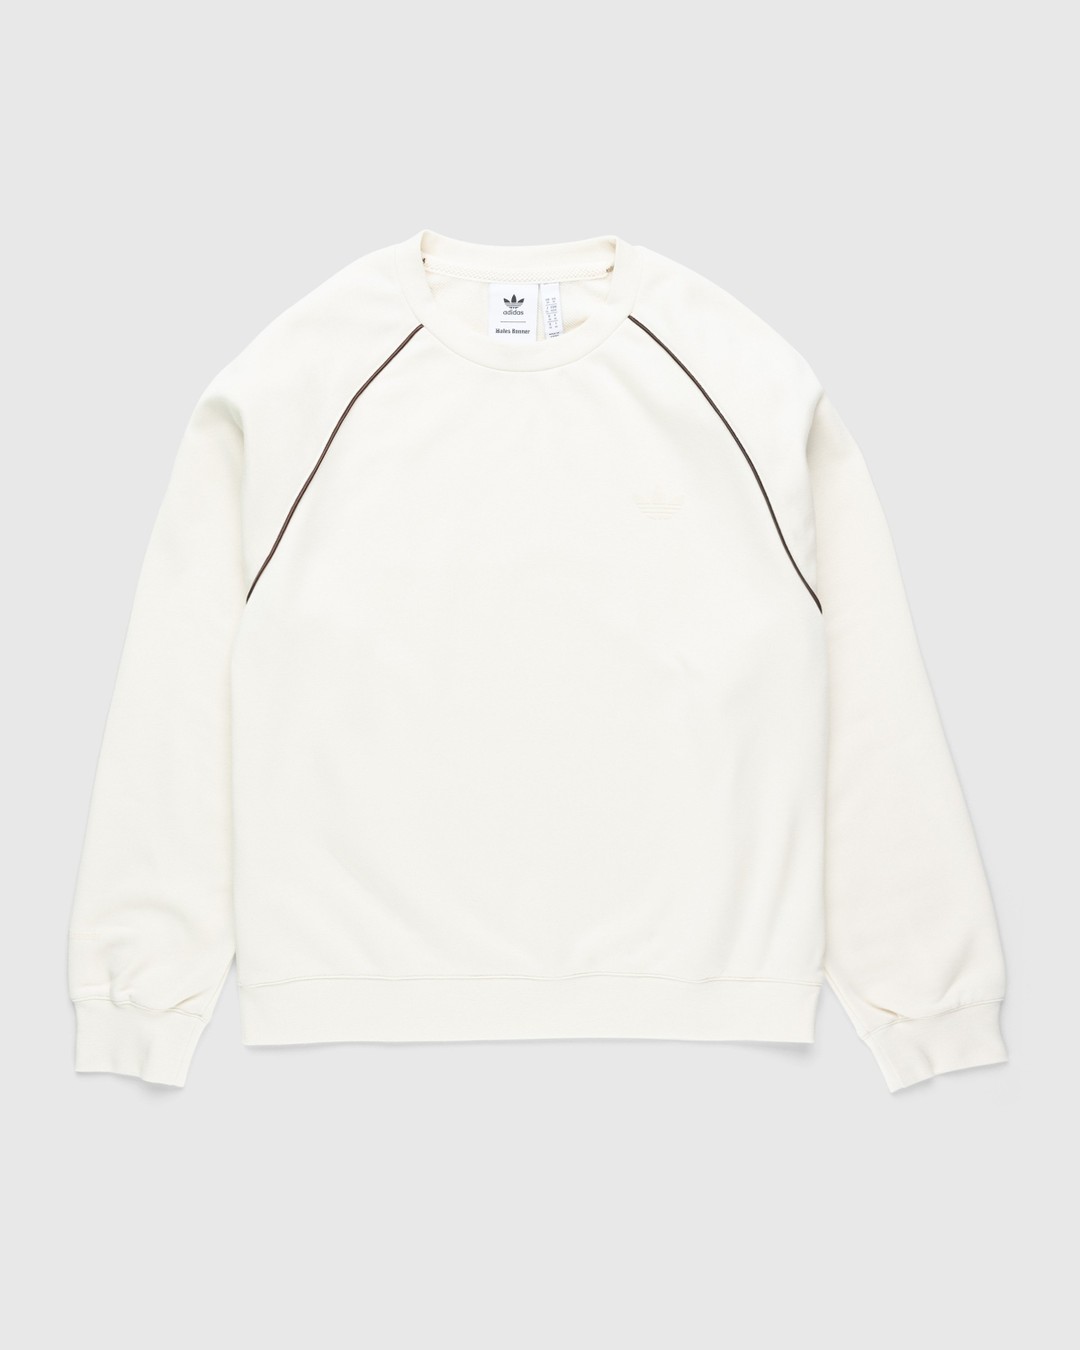 Adidas x Wales Bonner – Crewneck Sweater Wonder White - Knitwear - Beige - Image 1